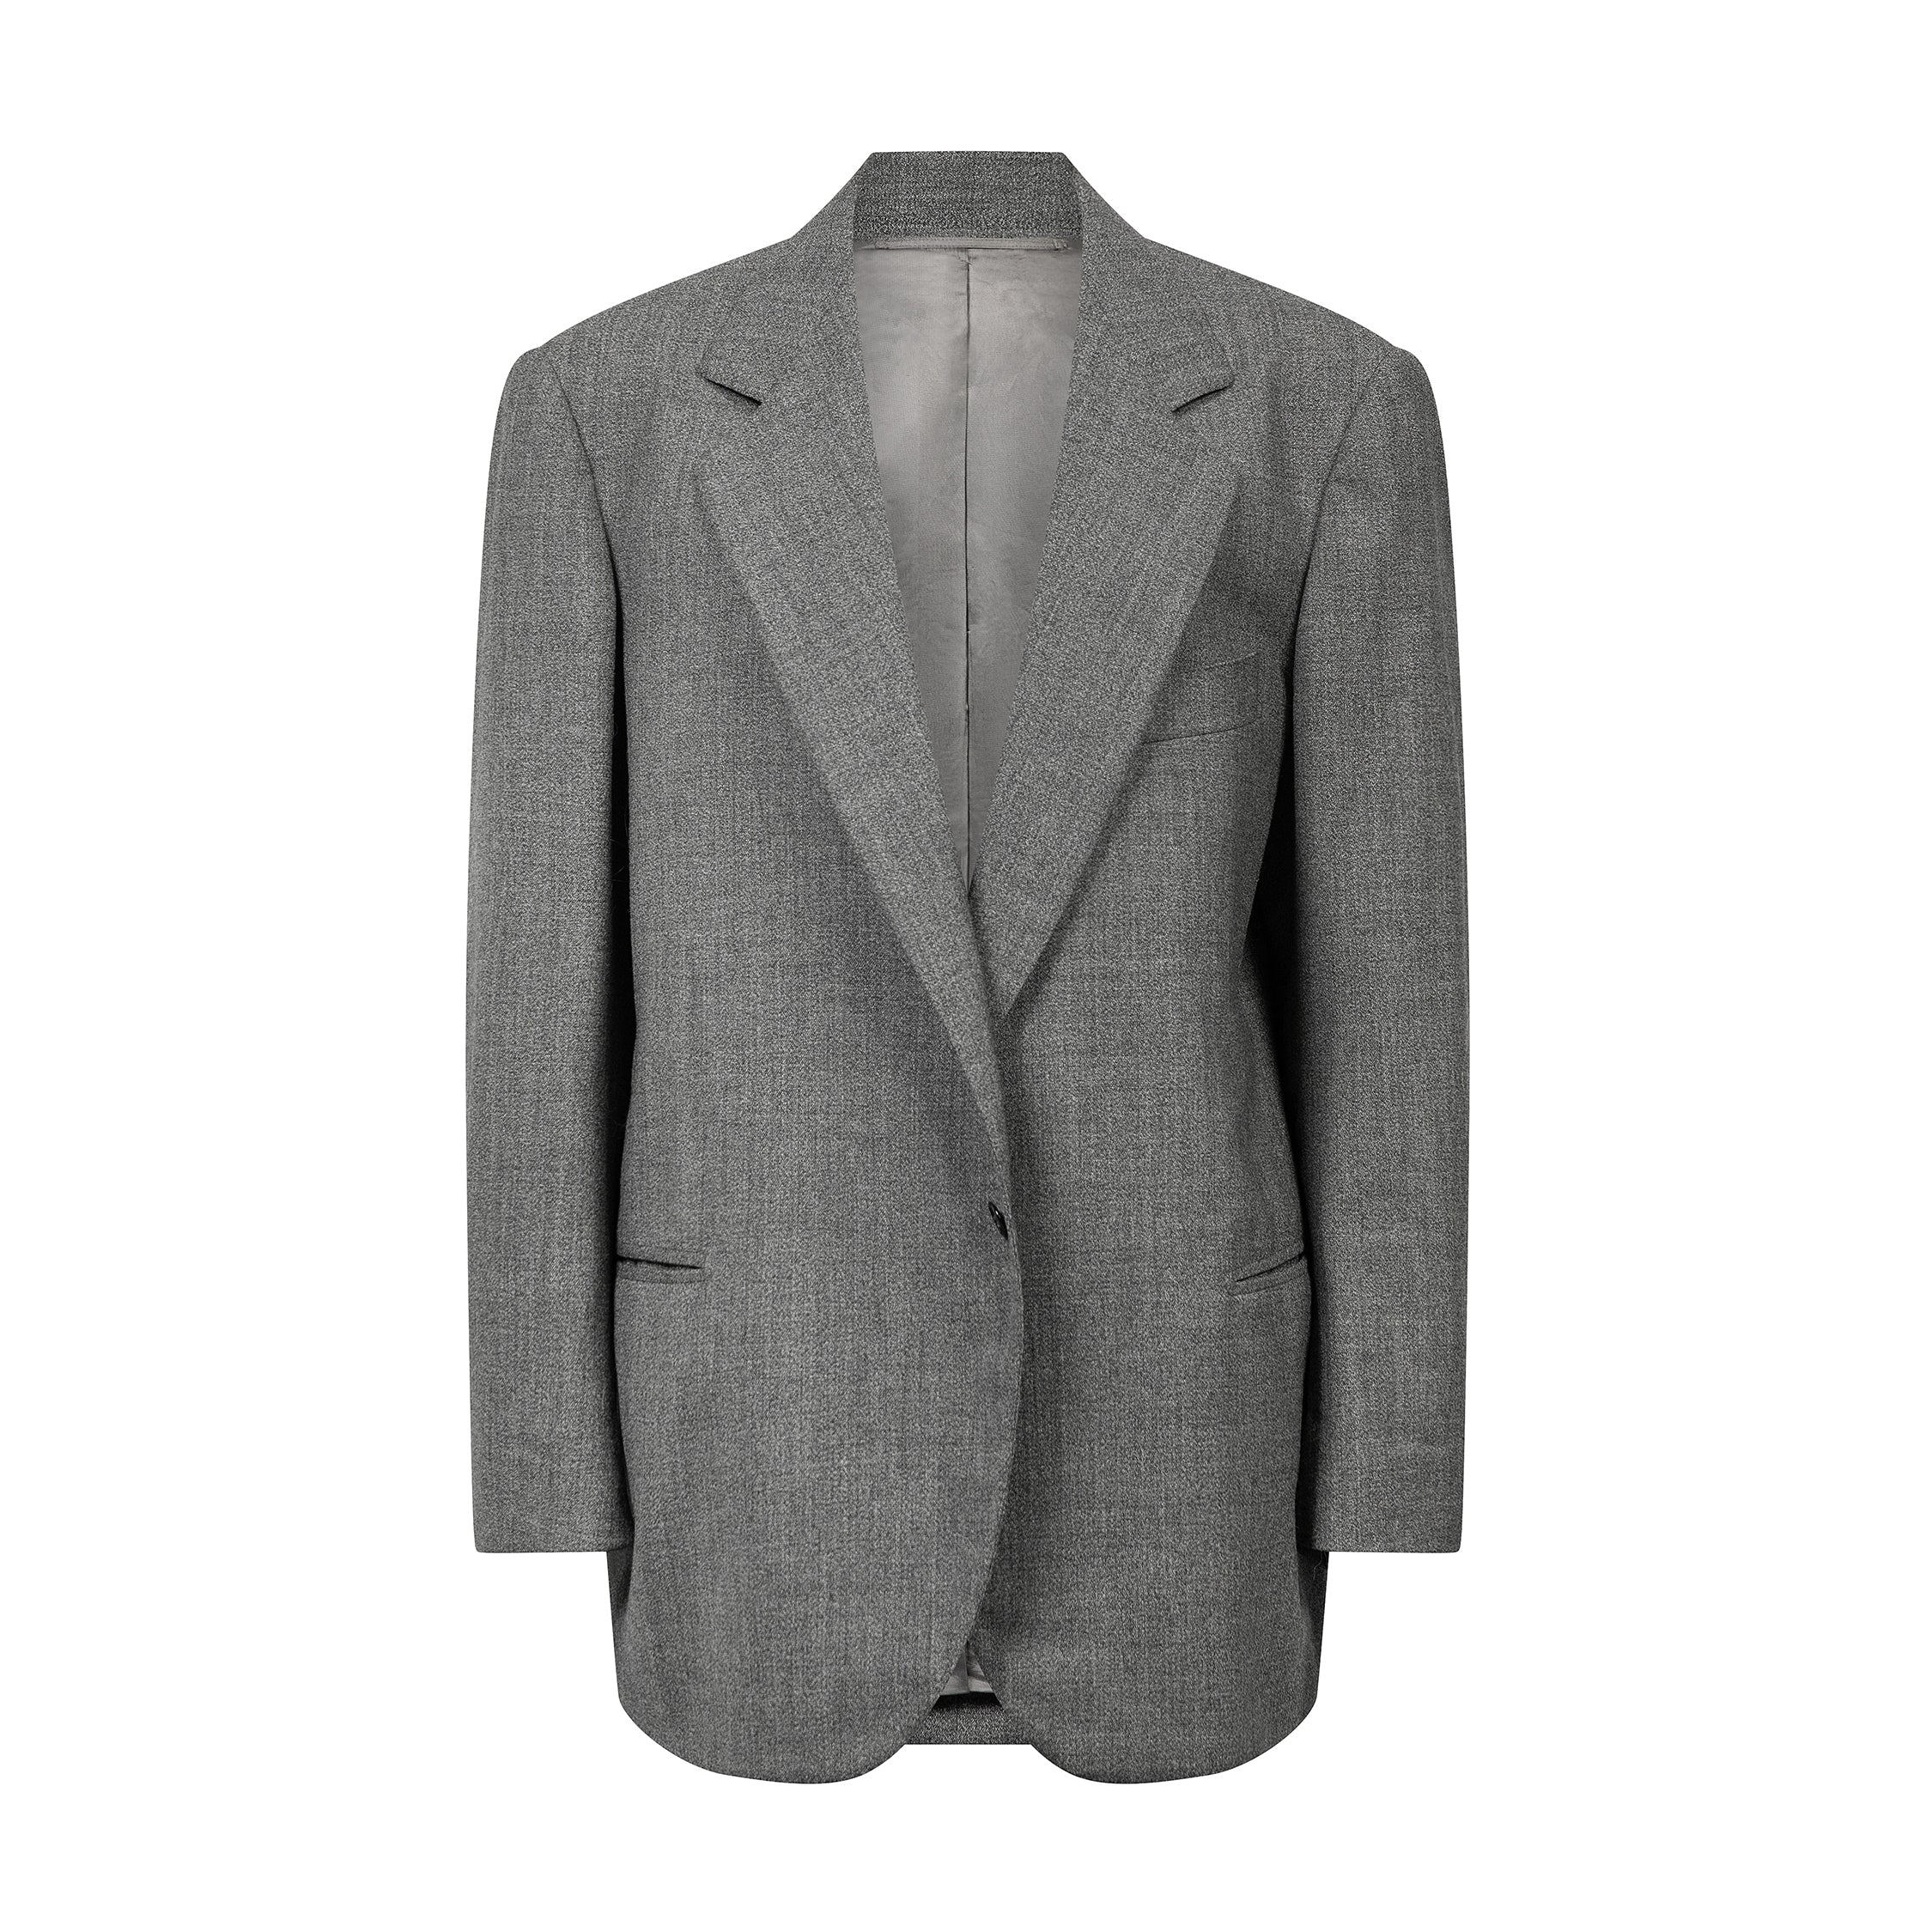 Mid grey wool 80's suit.